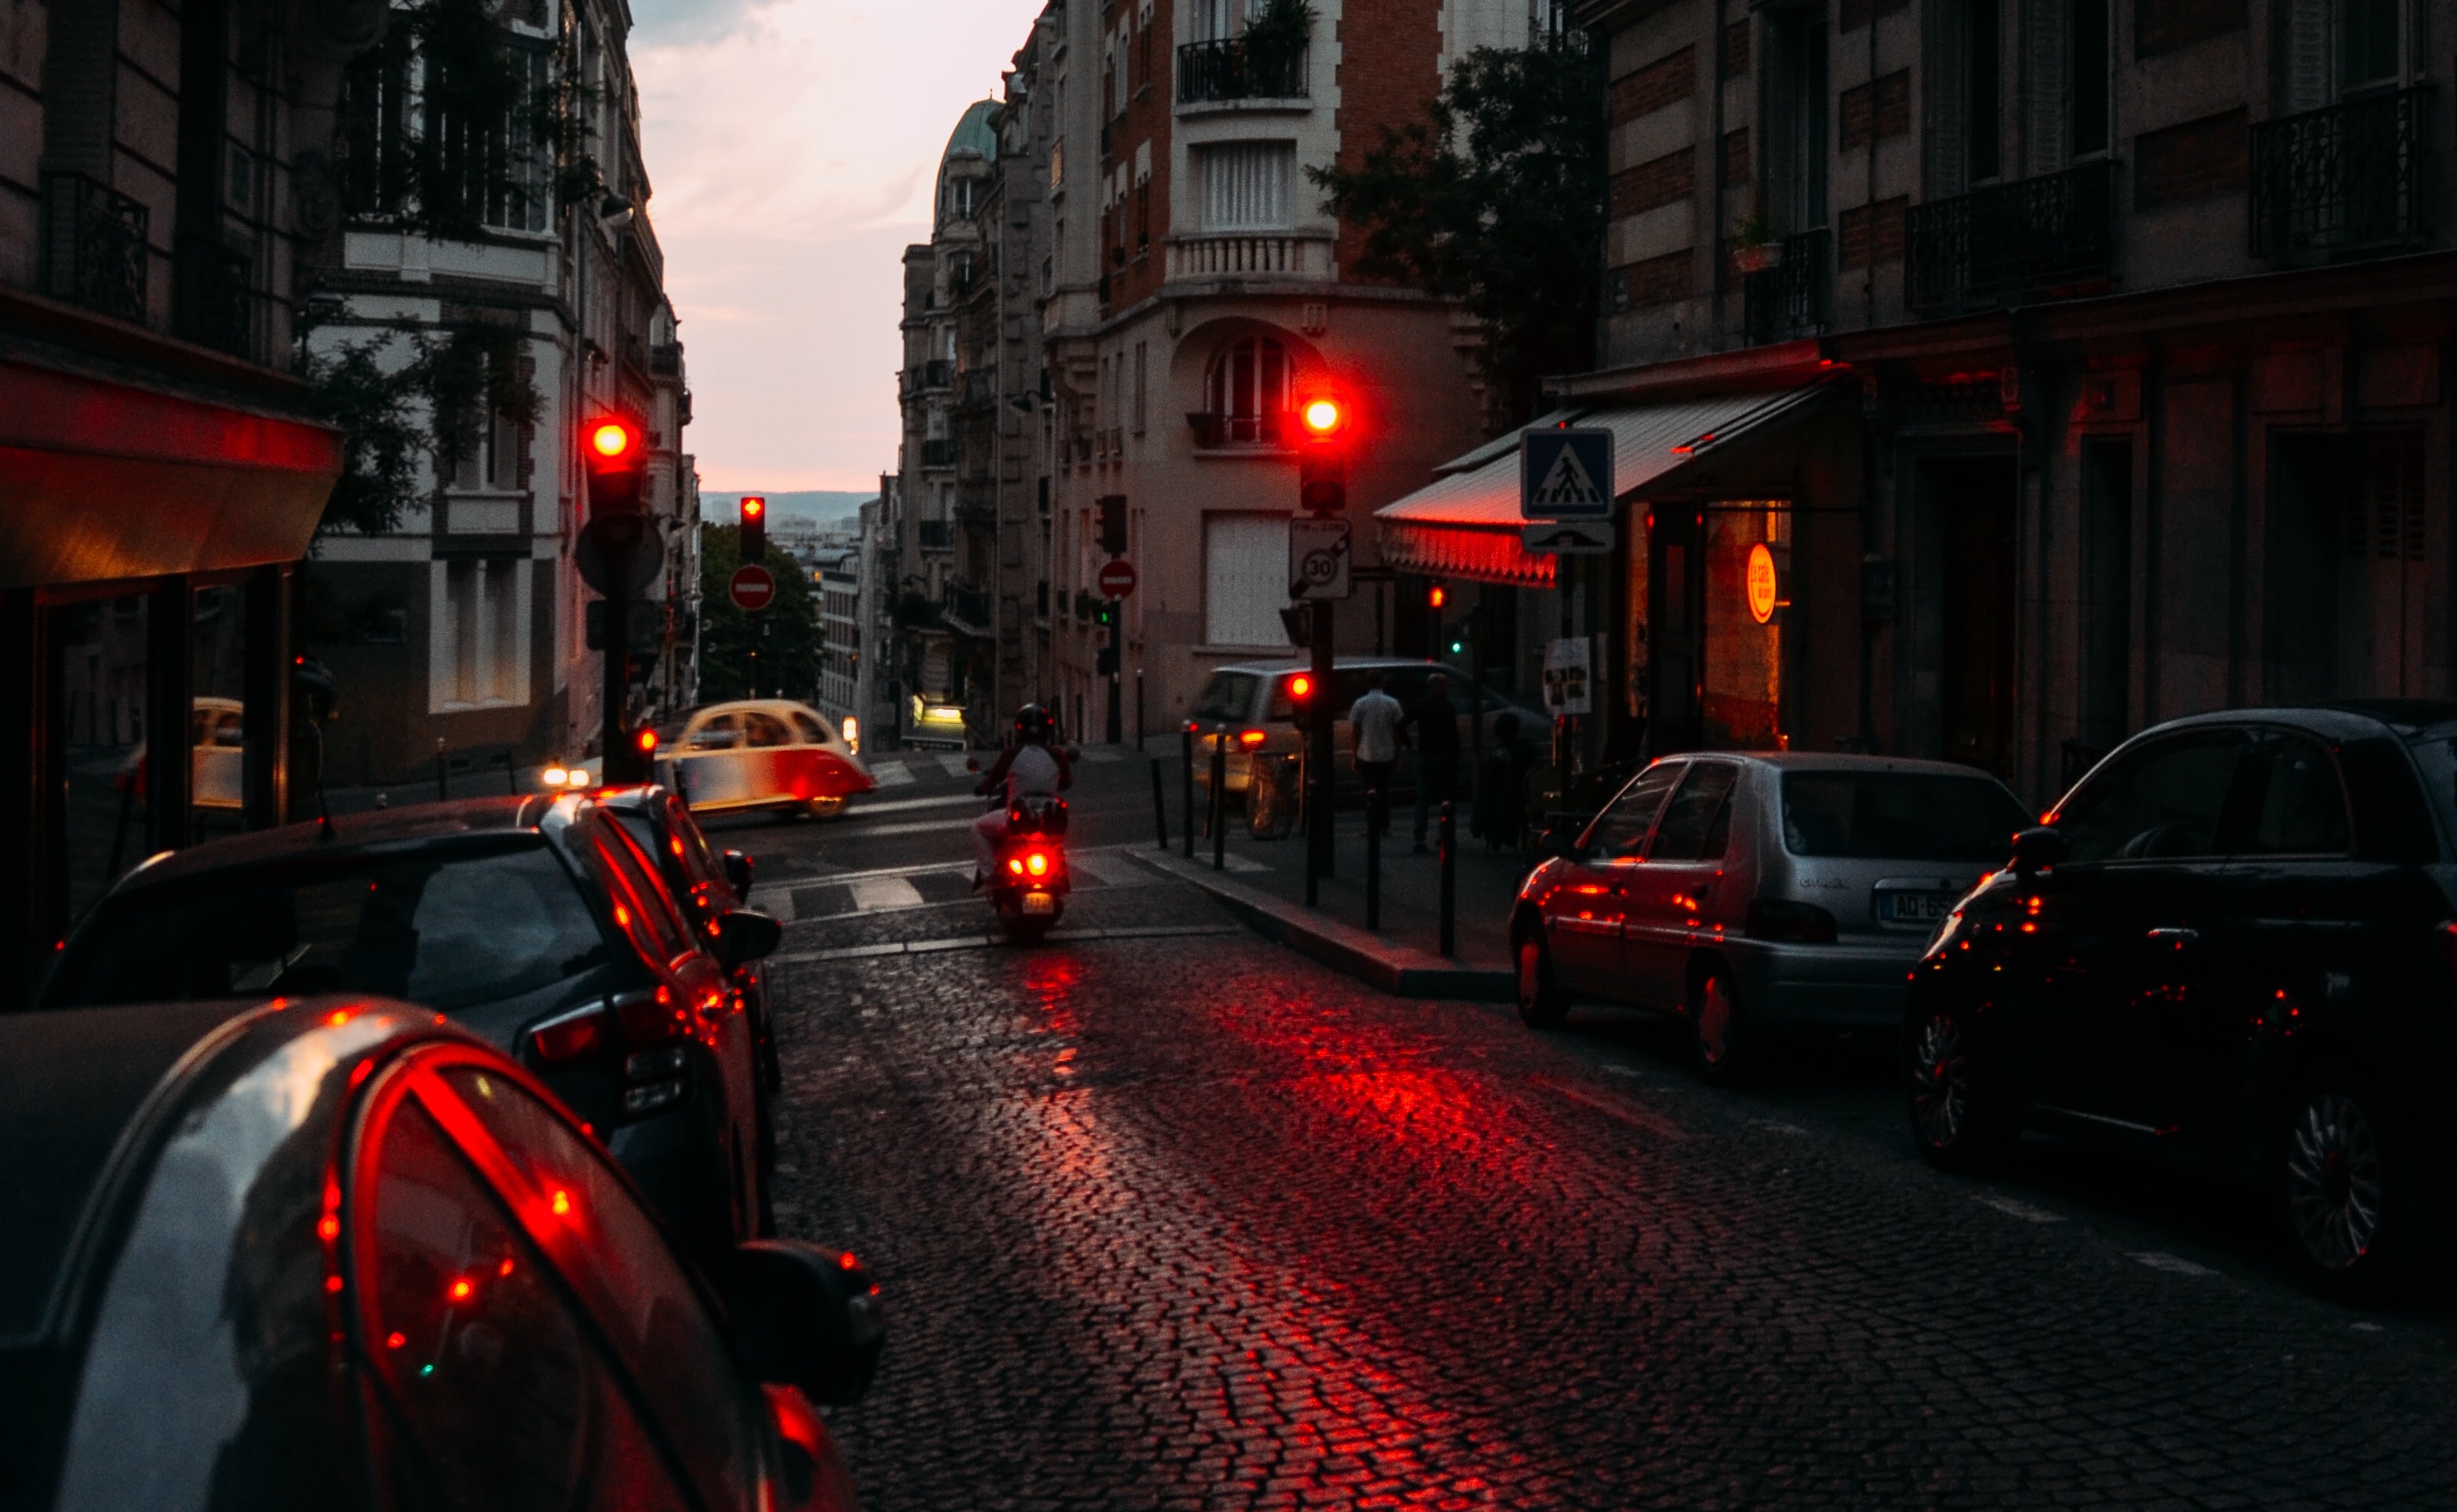 red traffic lights illuminate a dark cobblestone street.